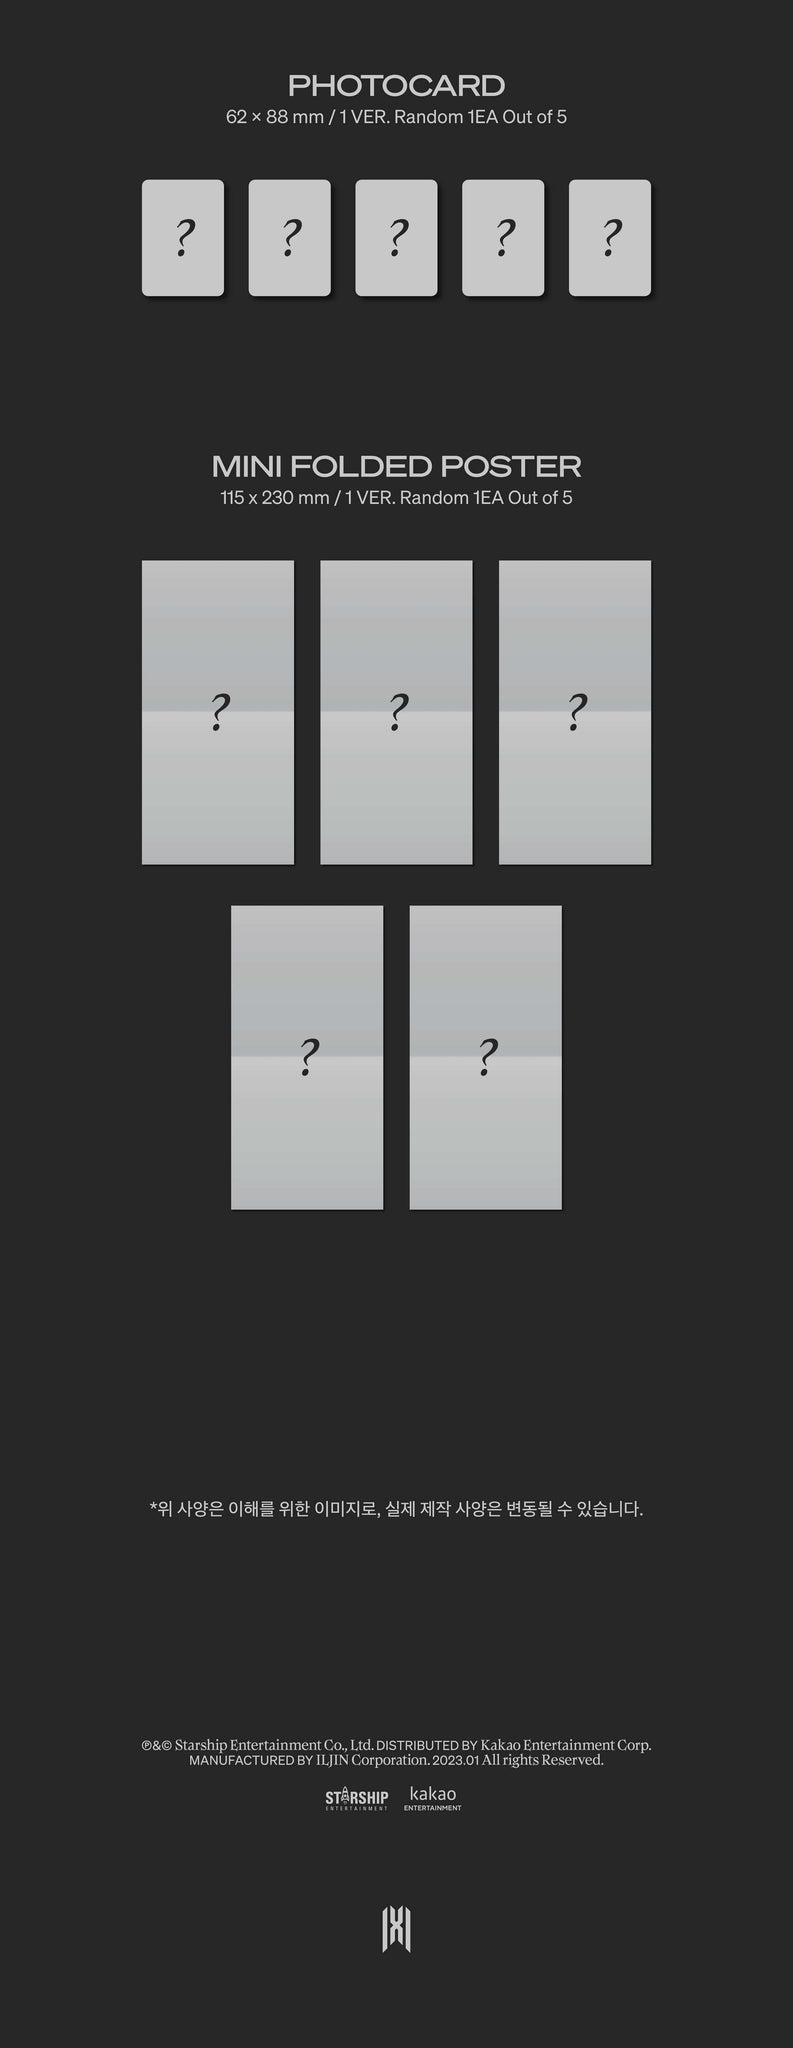 MONSTA X 12th Mini Album REASON - Jewel Version Inclusions Photocard Mini Folded Poster